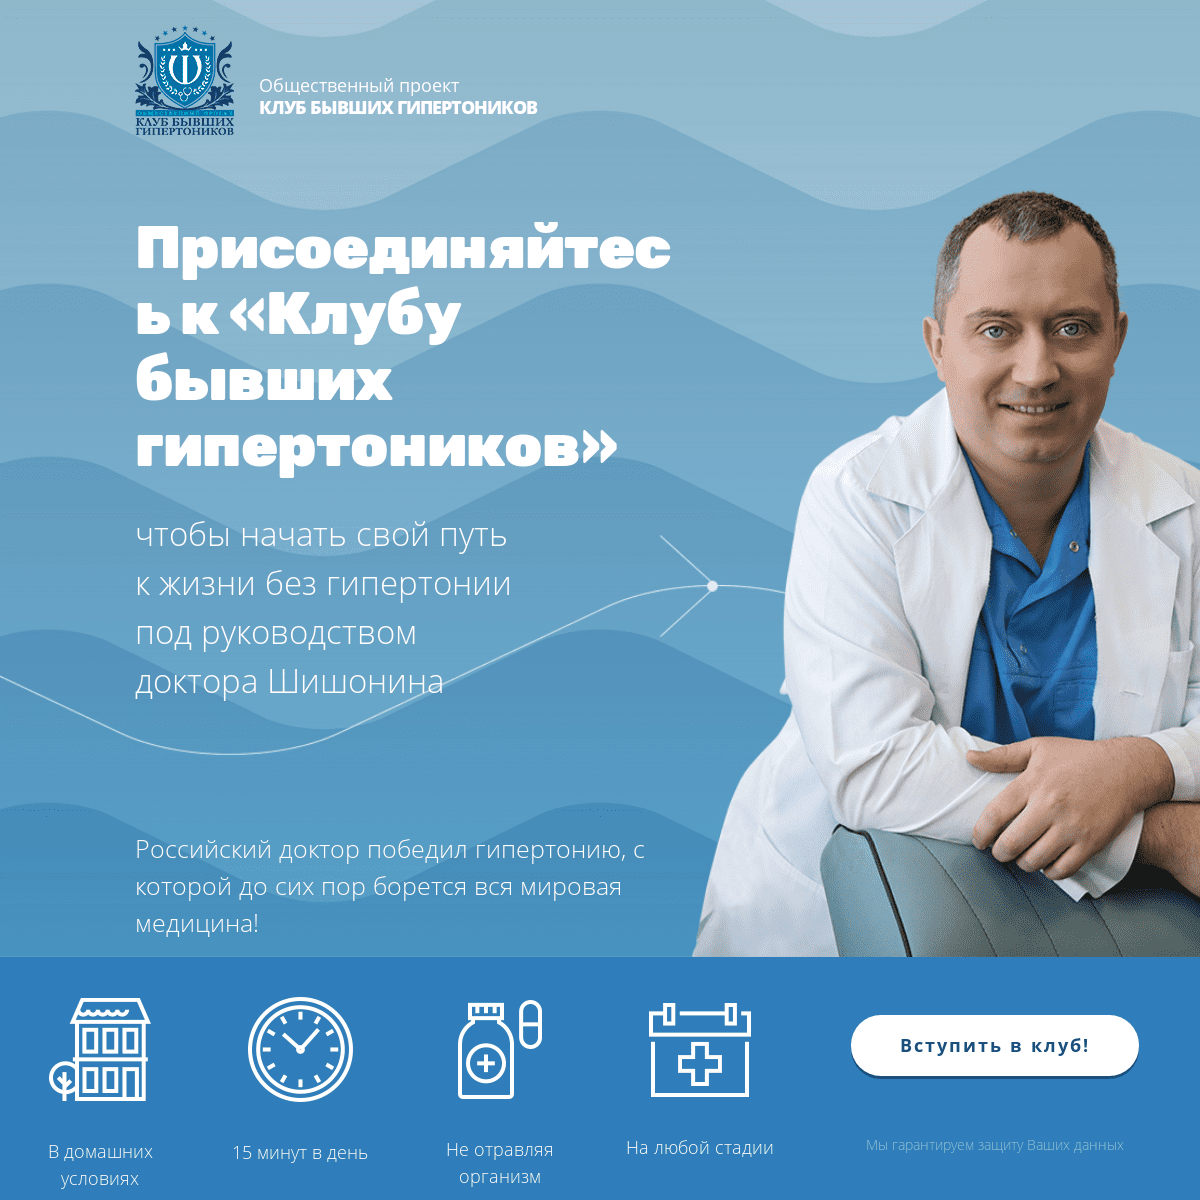 A complete backup of doctorshishonin.ru